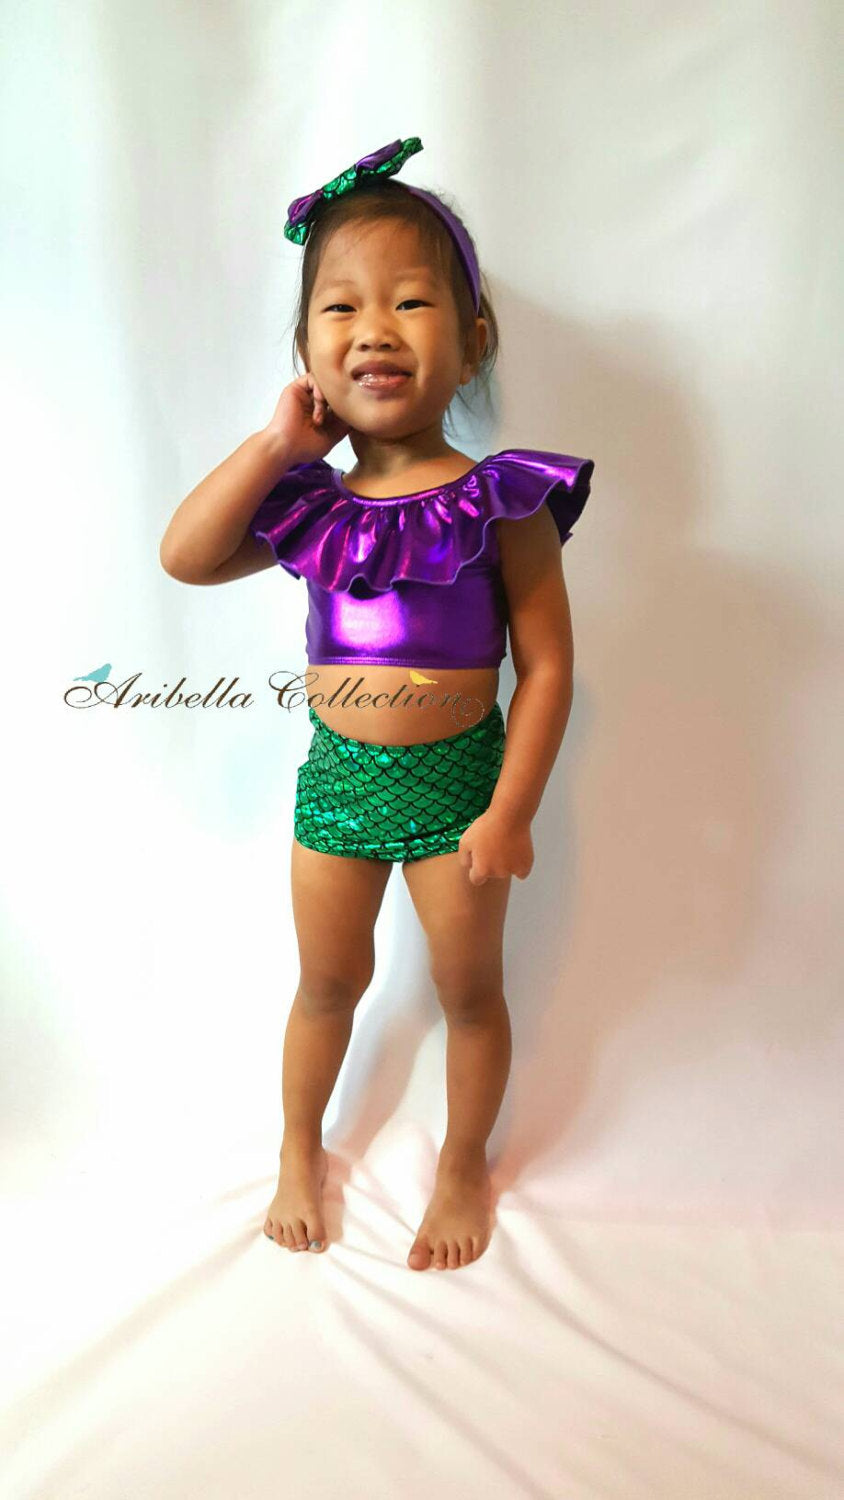 Mermaid Two Piece Ruffle Top Swimsuit - Green/Purple - Aribella Collection, Inc.